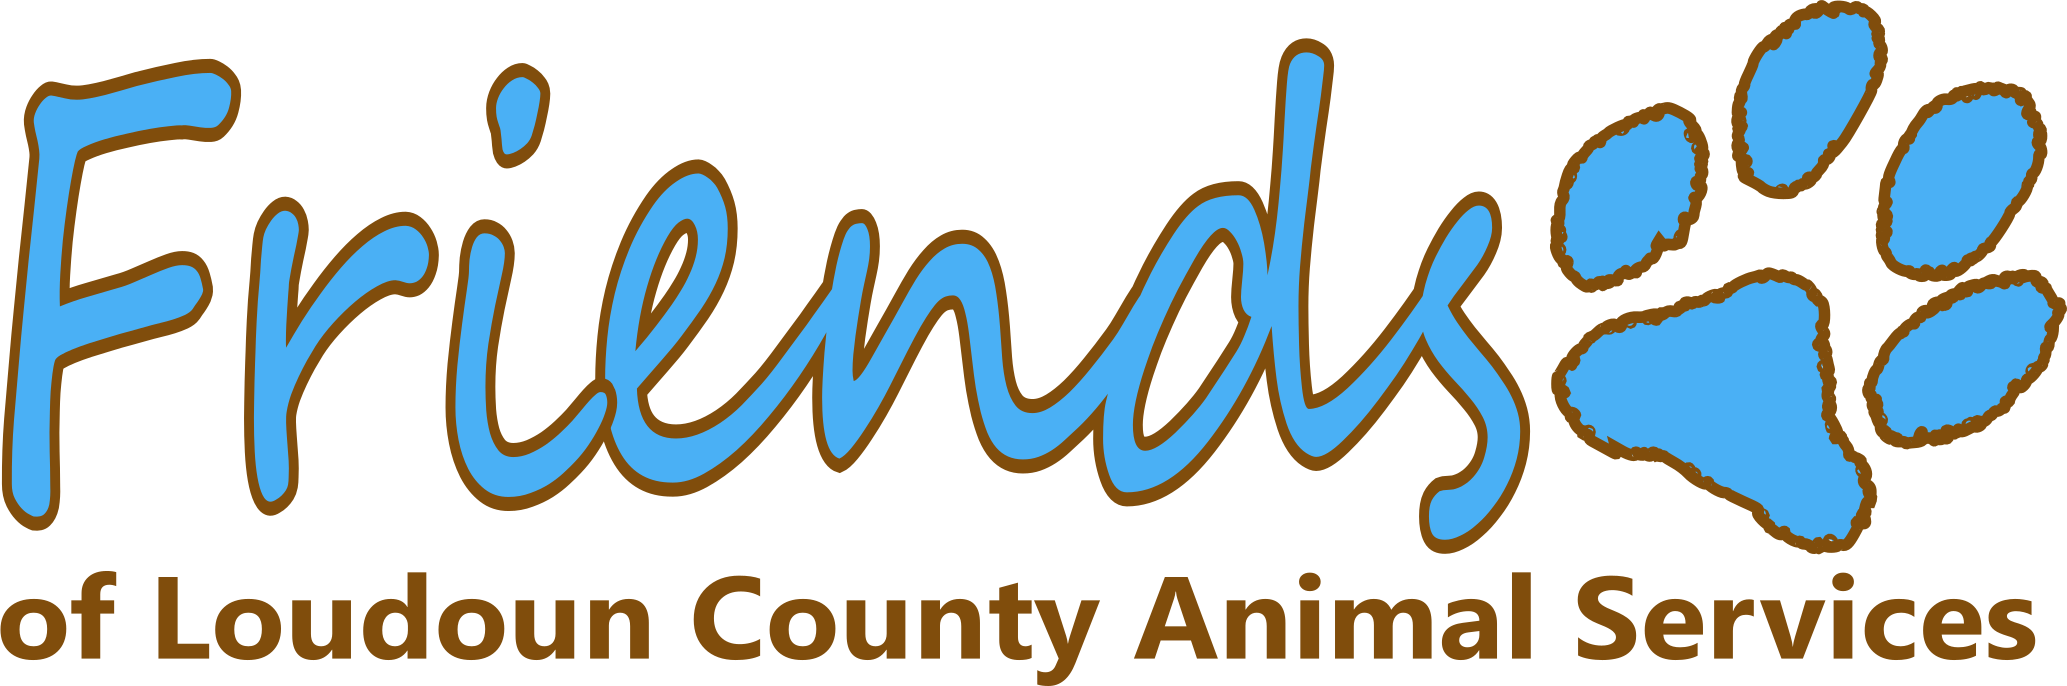 Friends of Loudoun County Animal Services logo